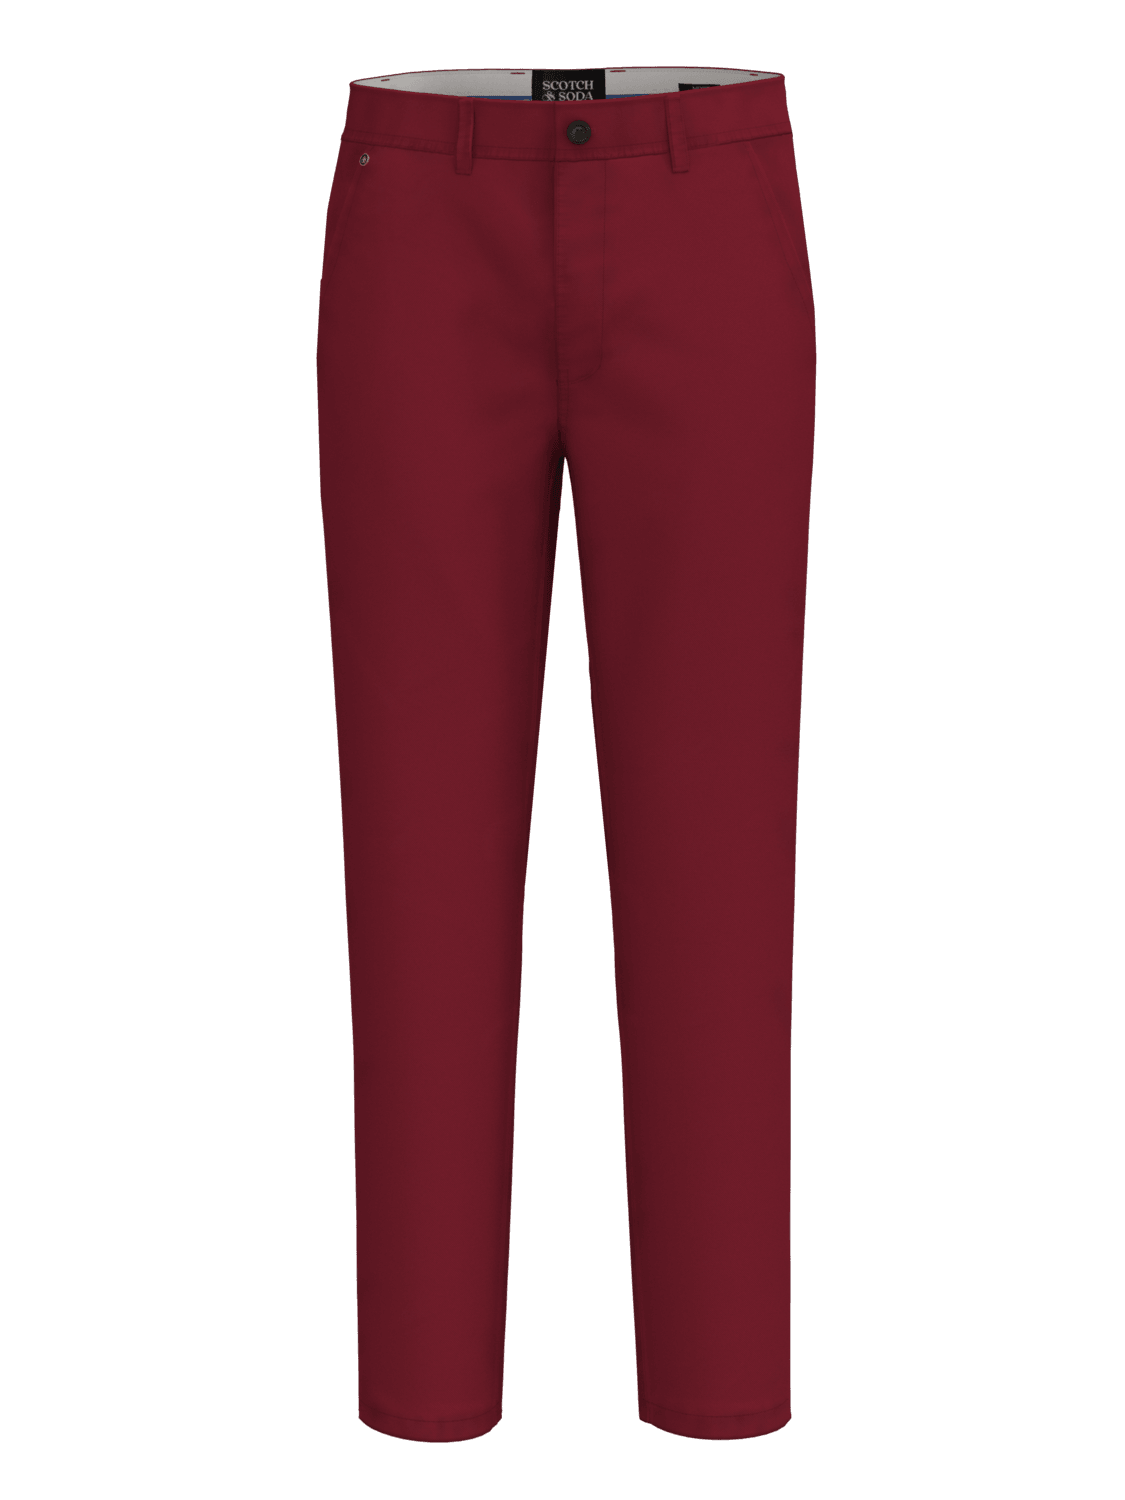 Laflamme- Pantalon de coton chino bordeaux - SCOTCH&SODA